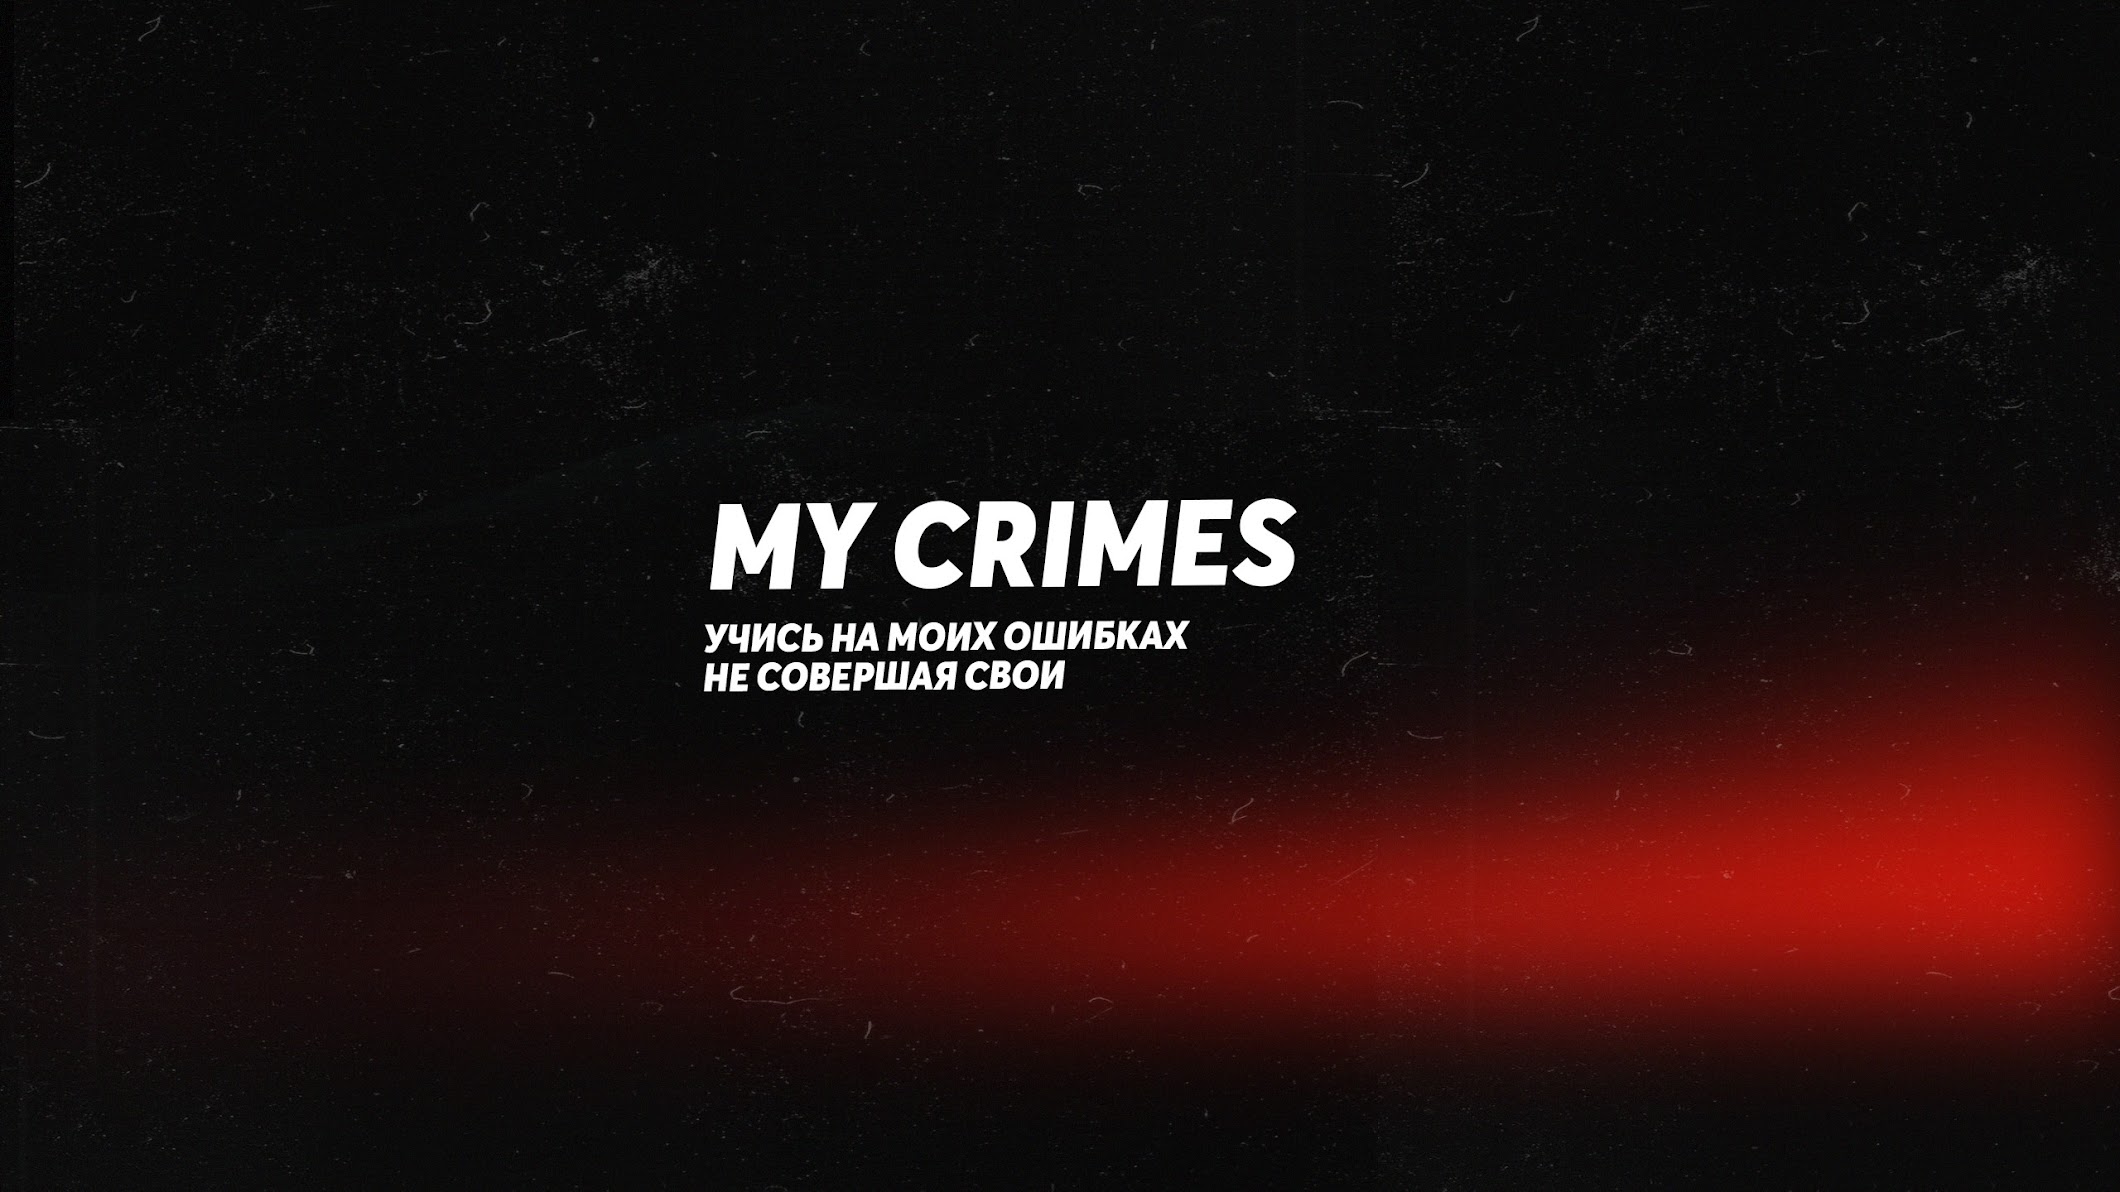 MY CRIMES